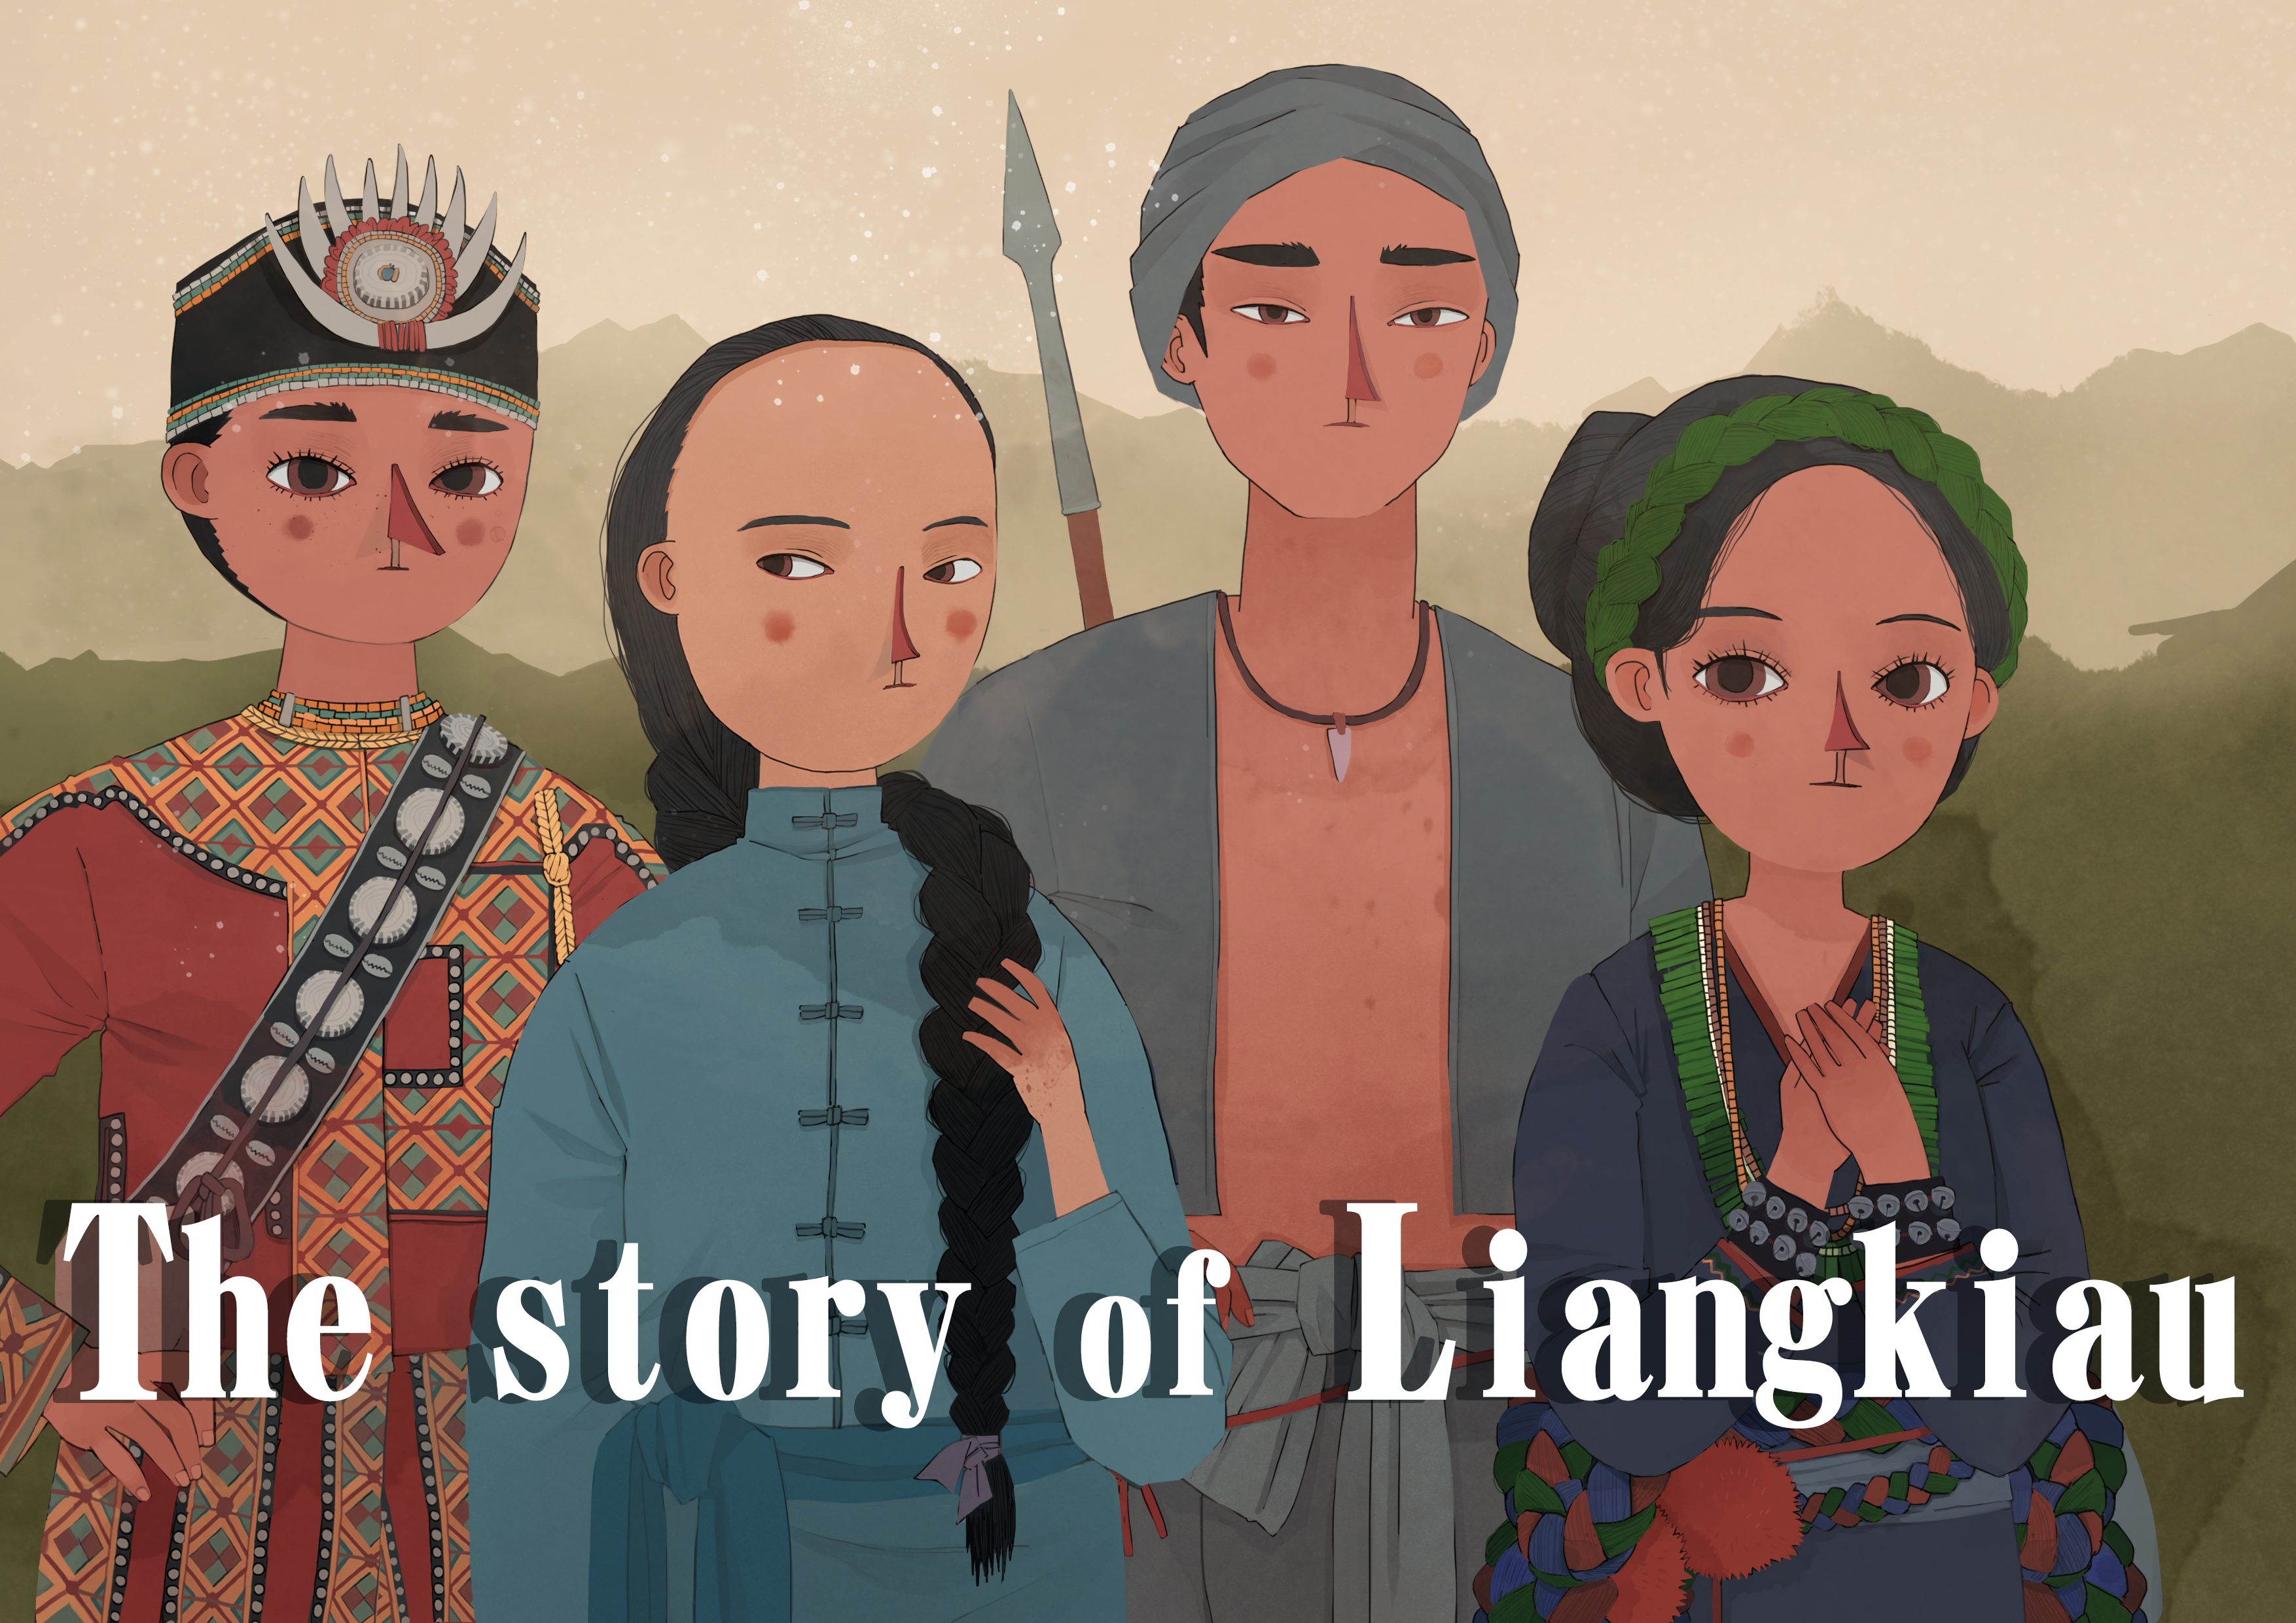 The story of Liangkiau